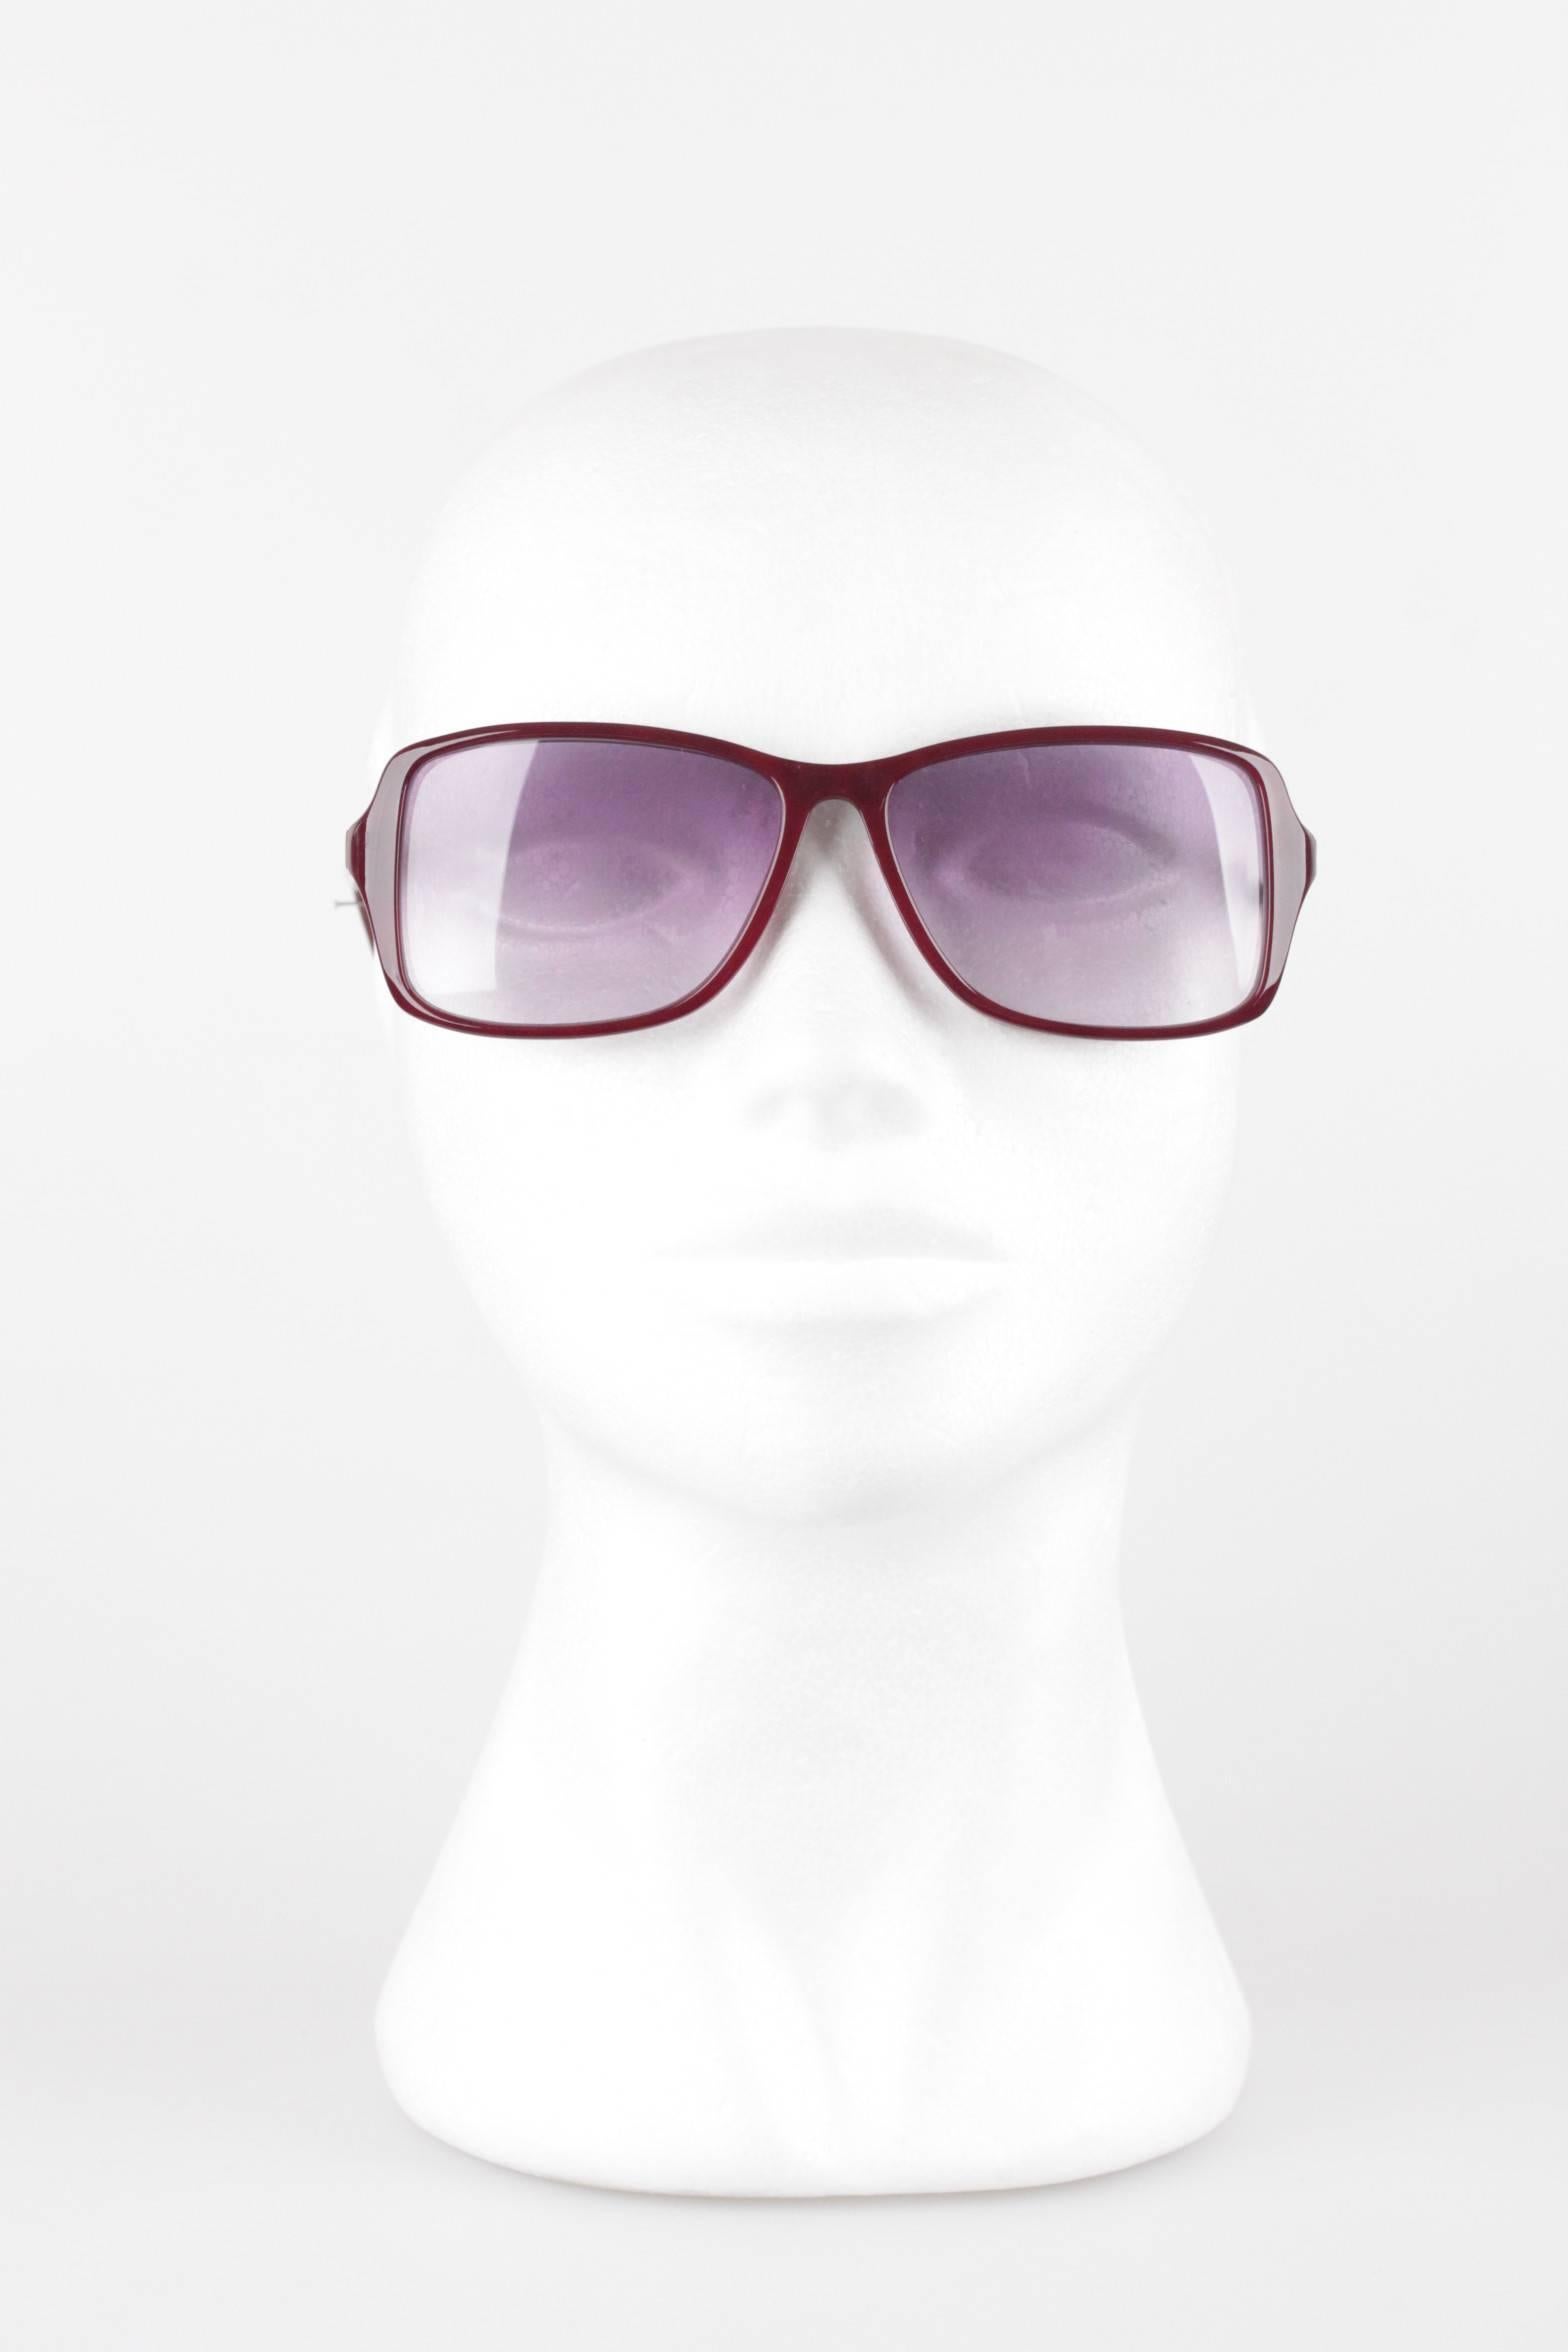 YVES SAINT LAURENT vintage MINT/PRISTINE sunglasses

Mod. ICARE - 59/14 - 537- Made in France

Burgundy half aviator / rectangular shape. Purple GRADIENT mint 100% UV protection lenses

Condition: A+ :MINT CONDITION! Mint item. Never worn or